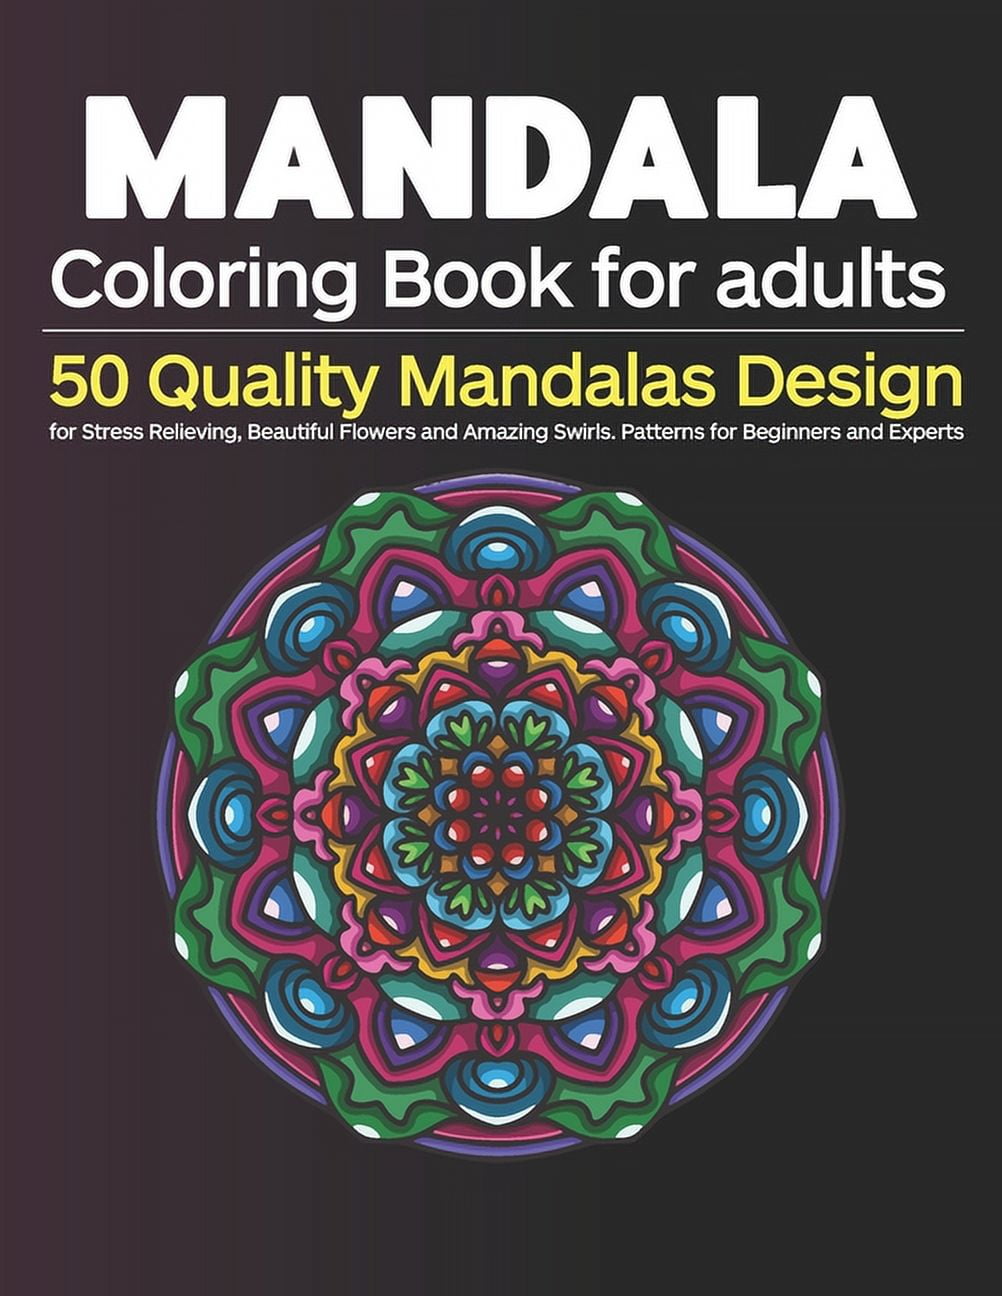 Colorya Mandala Mystery coloring book review and flip through